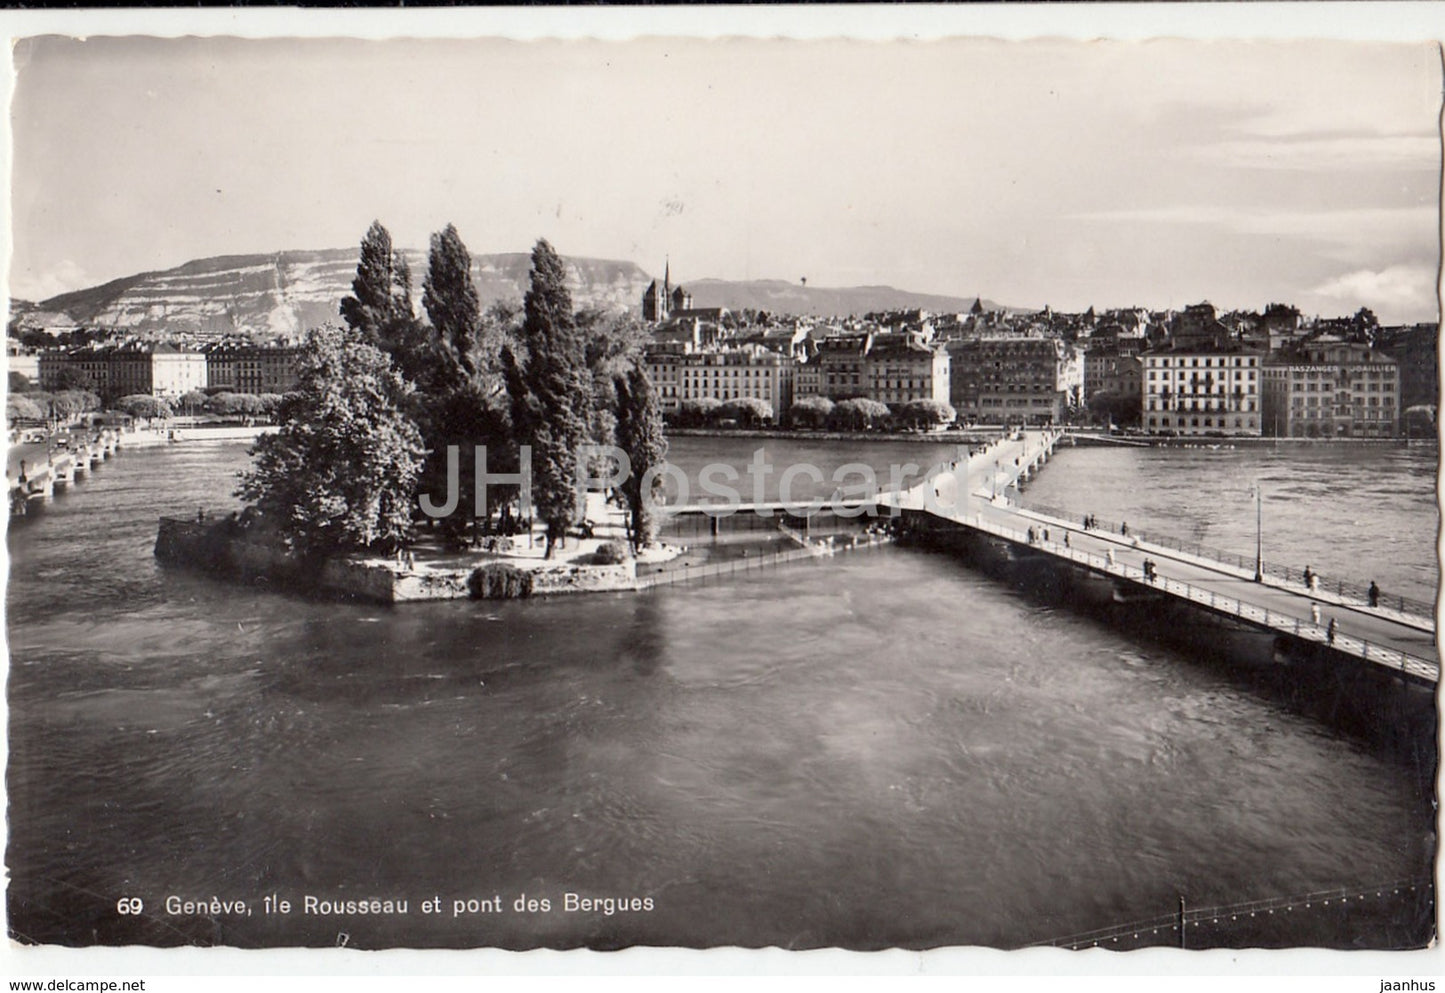 Geneve - Geneva - Ile Rousseau et pont des Bergues - 69 - Switzerland - 1954 - used - JH Postcards